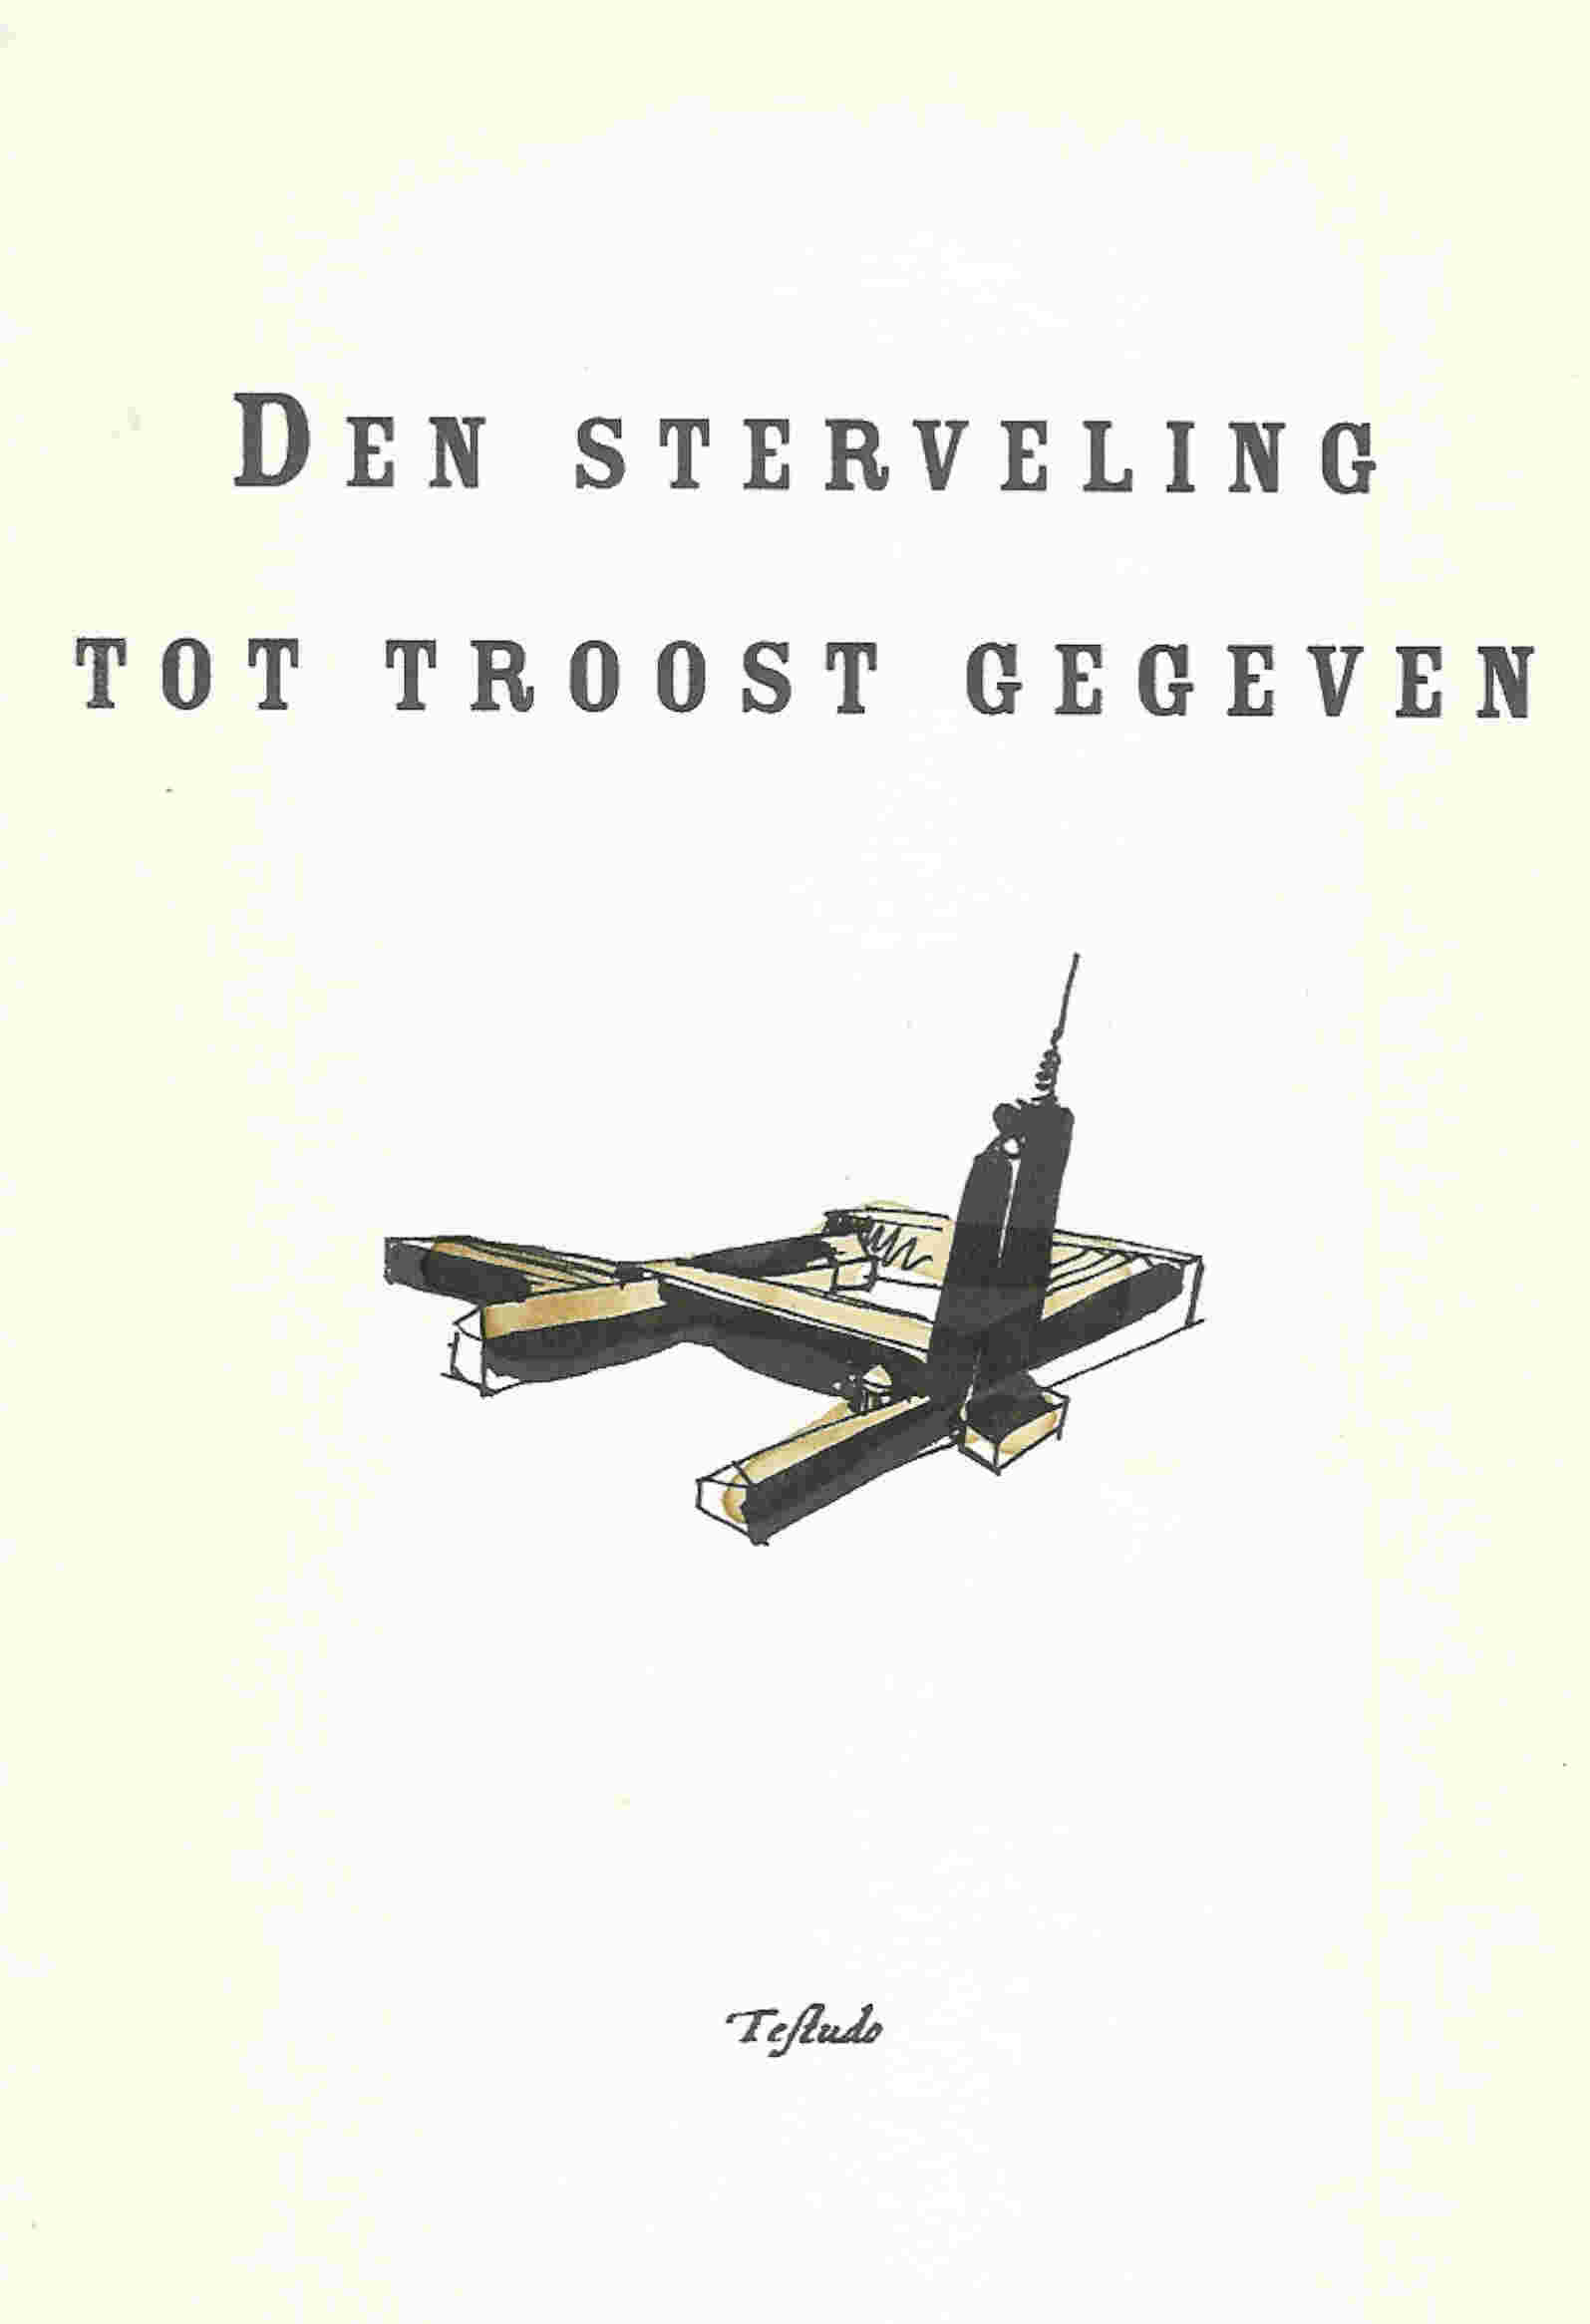 Den sterveling tot troost gegeven, Testudo, Rotterdam 1999